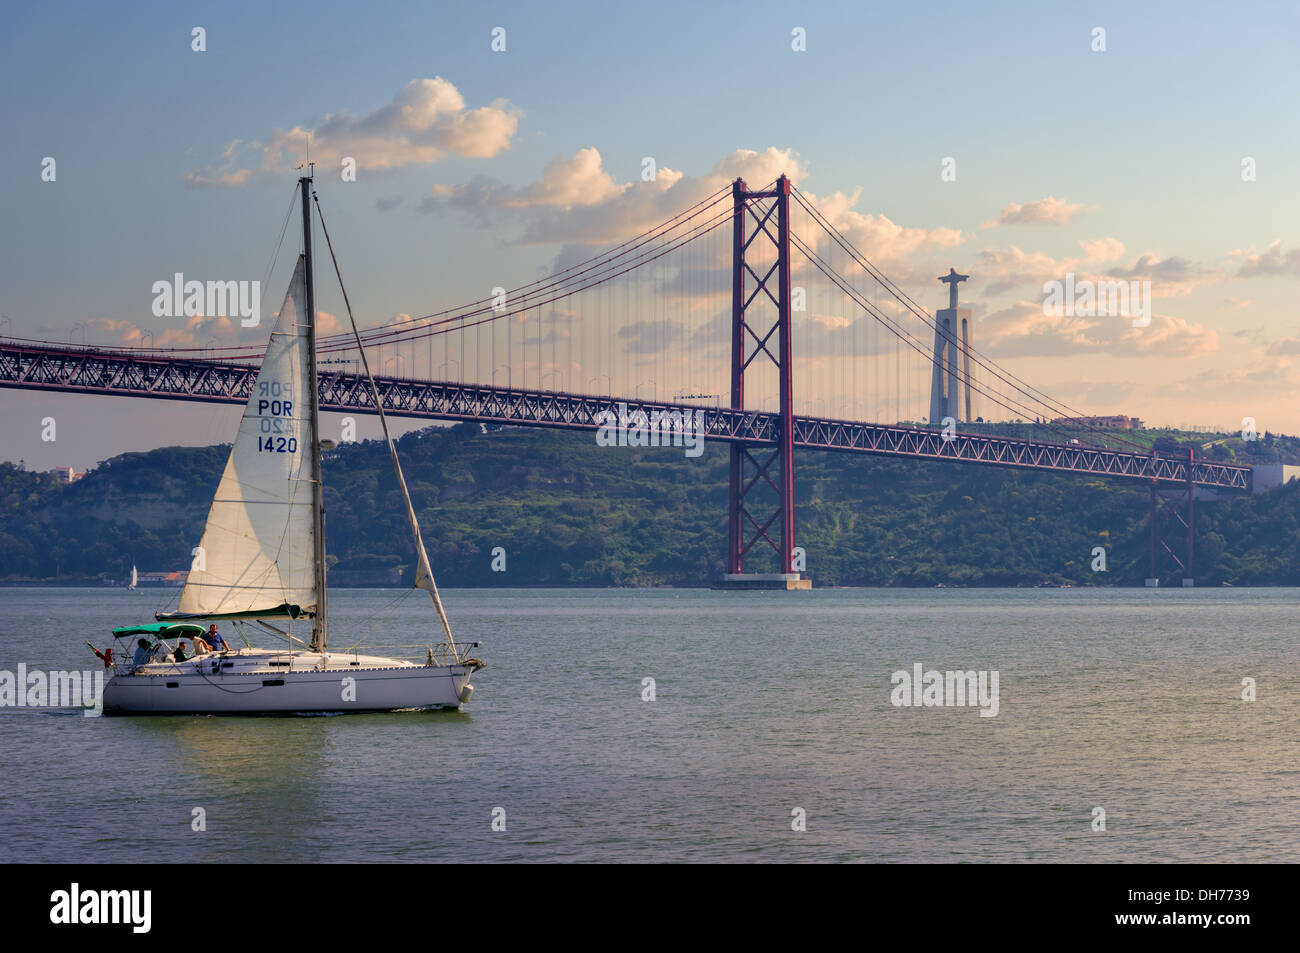 Portugal, Lisbon, the Cristo Rei monument and the Ponte 25 de Abril bridge at dusk Stock Photo